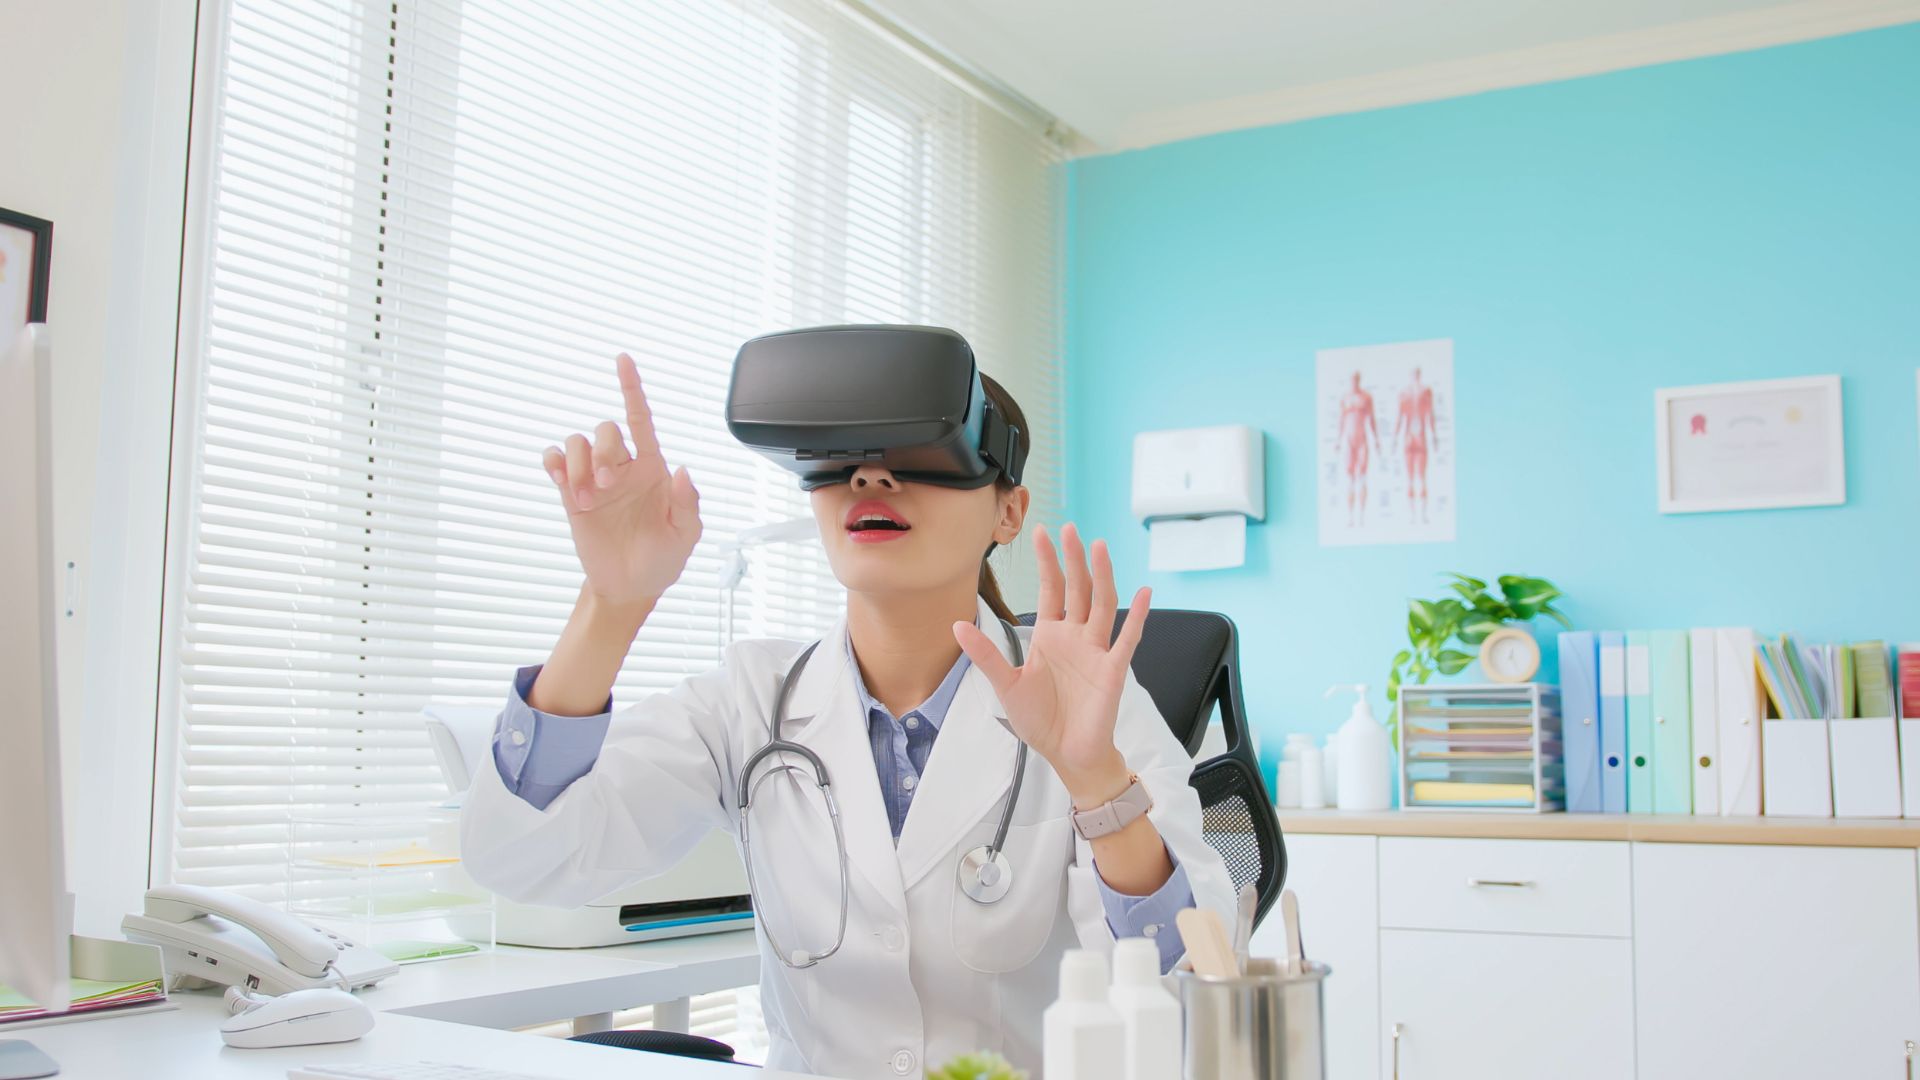 Integrating virtual reality into medical education